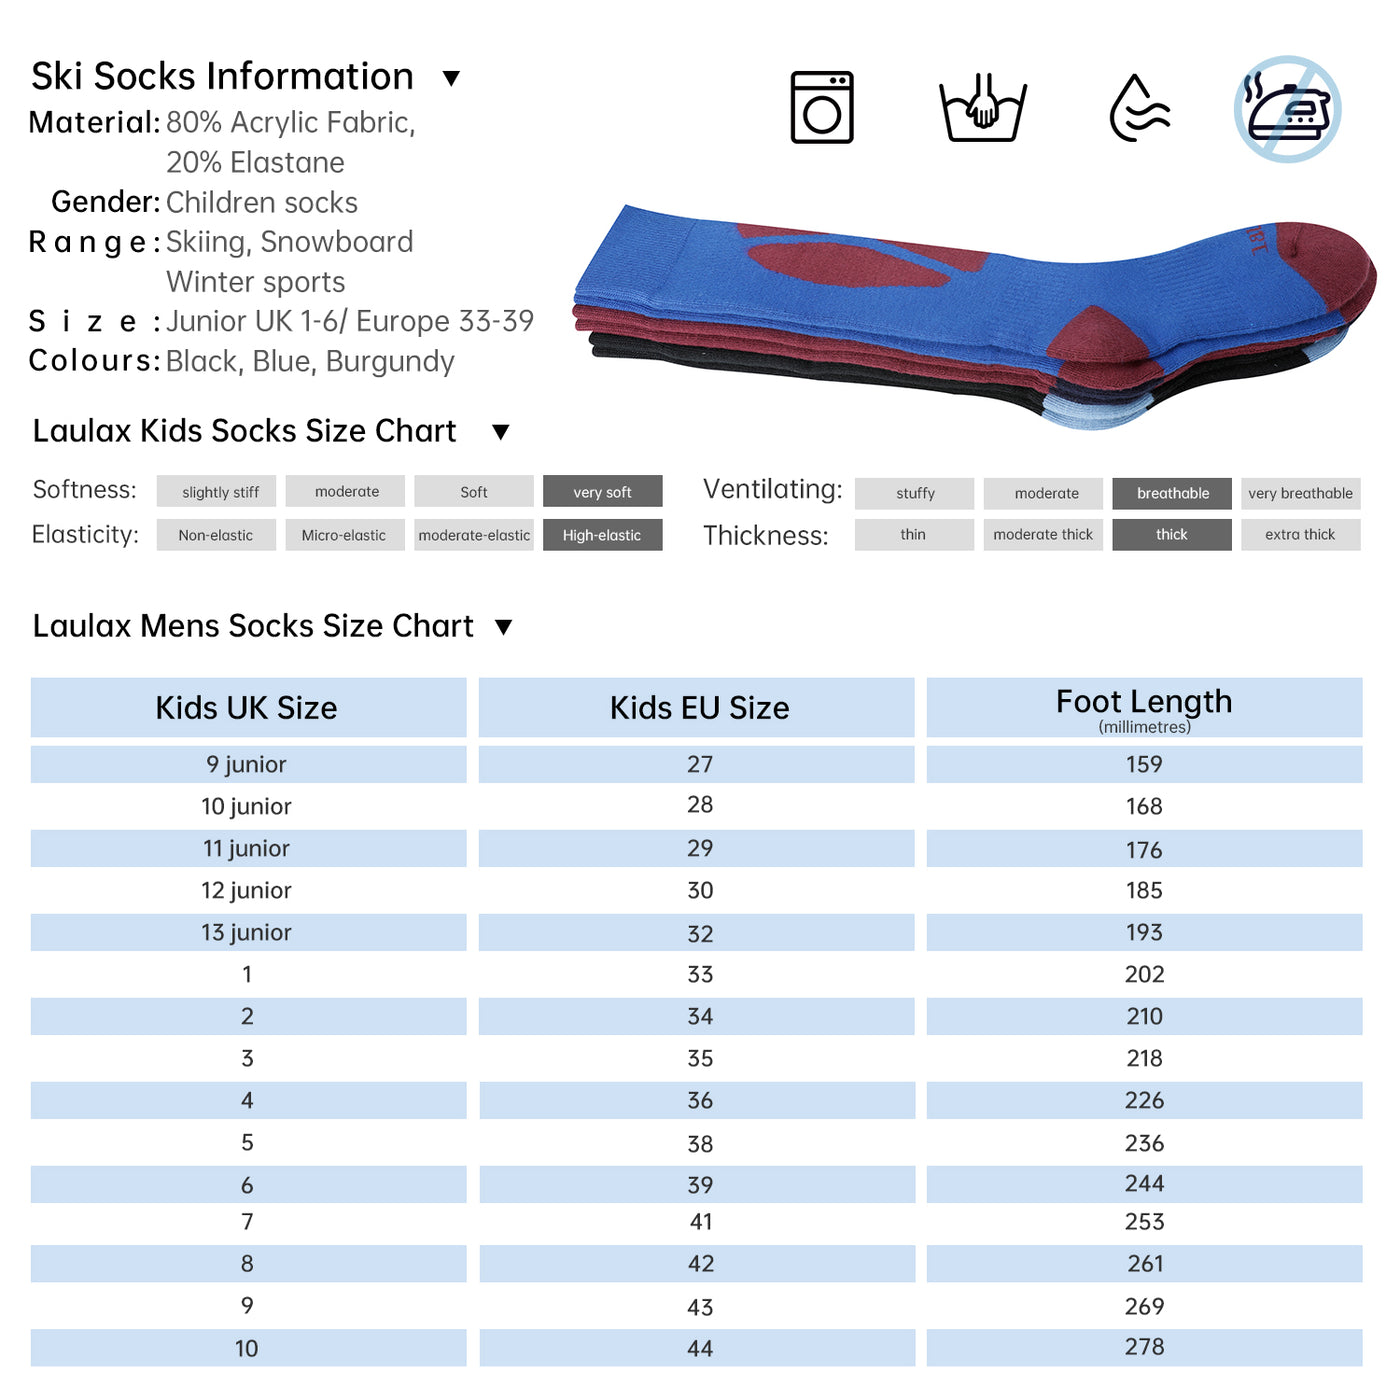 Laulax 3 Pairs Boys Cashmere-Like Long Hose Winter Sports Ski Socks Gift Set, Size Junior 1-6, Black, Blue, Burgundy